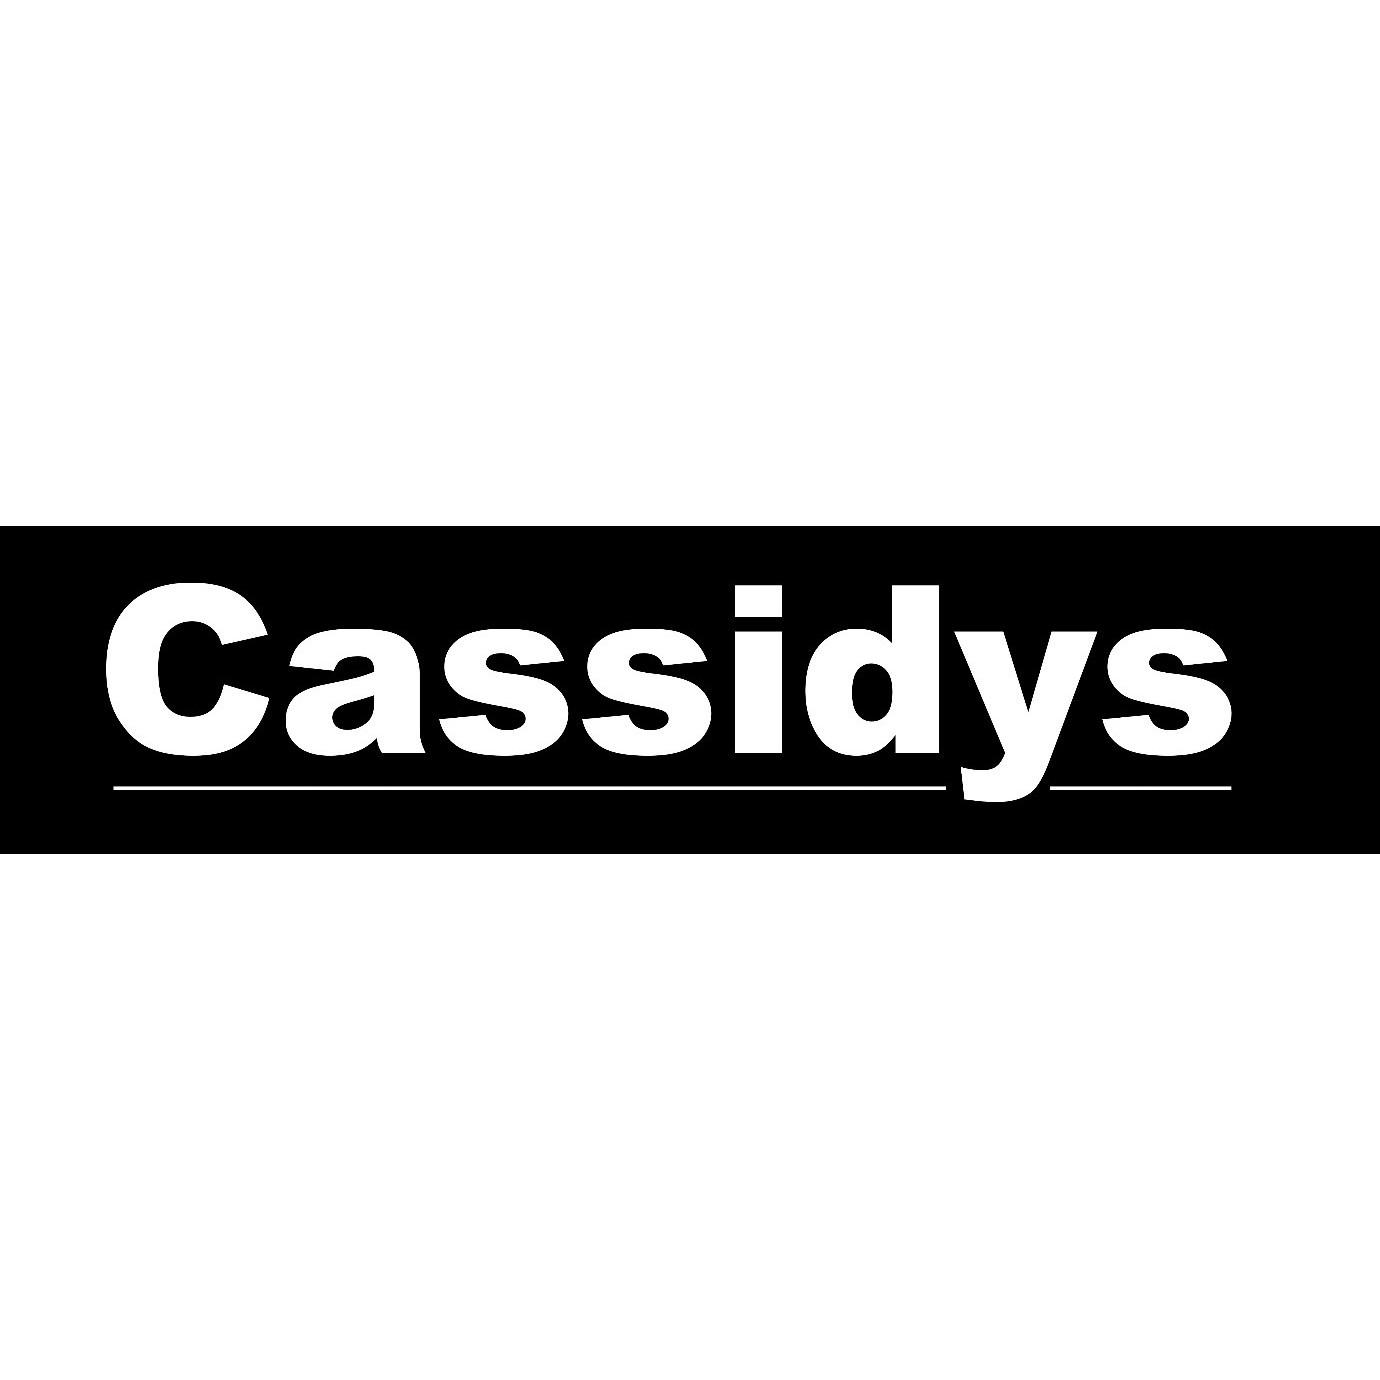 Cassidys Department Store Macquarie (02) 6251 1911